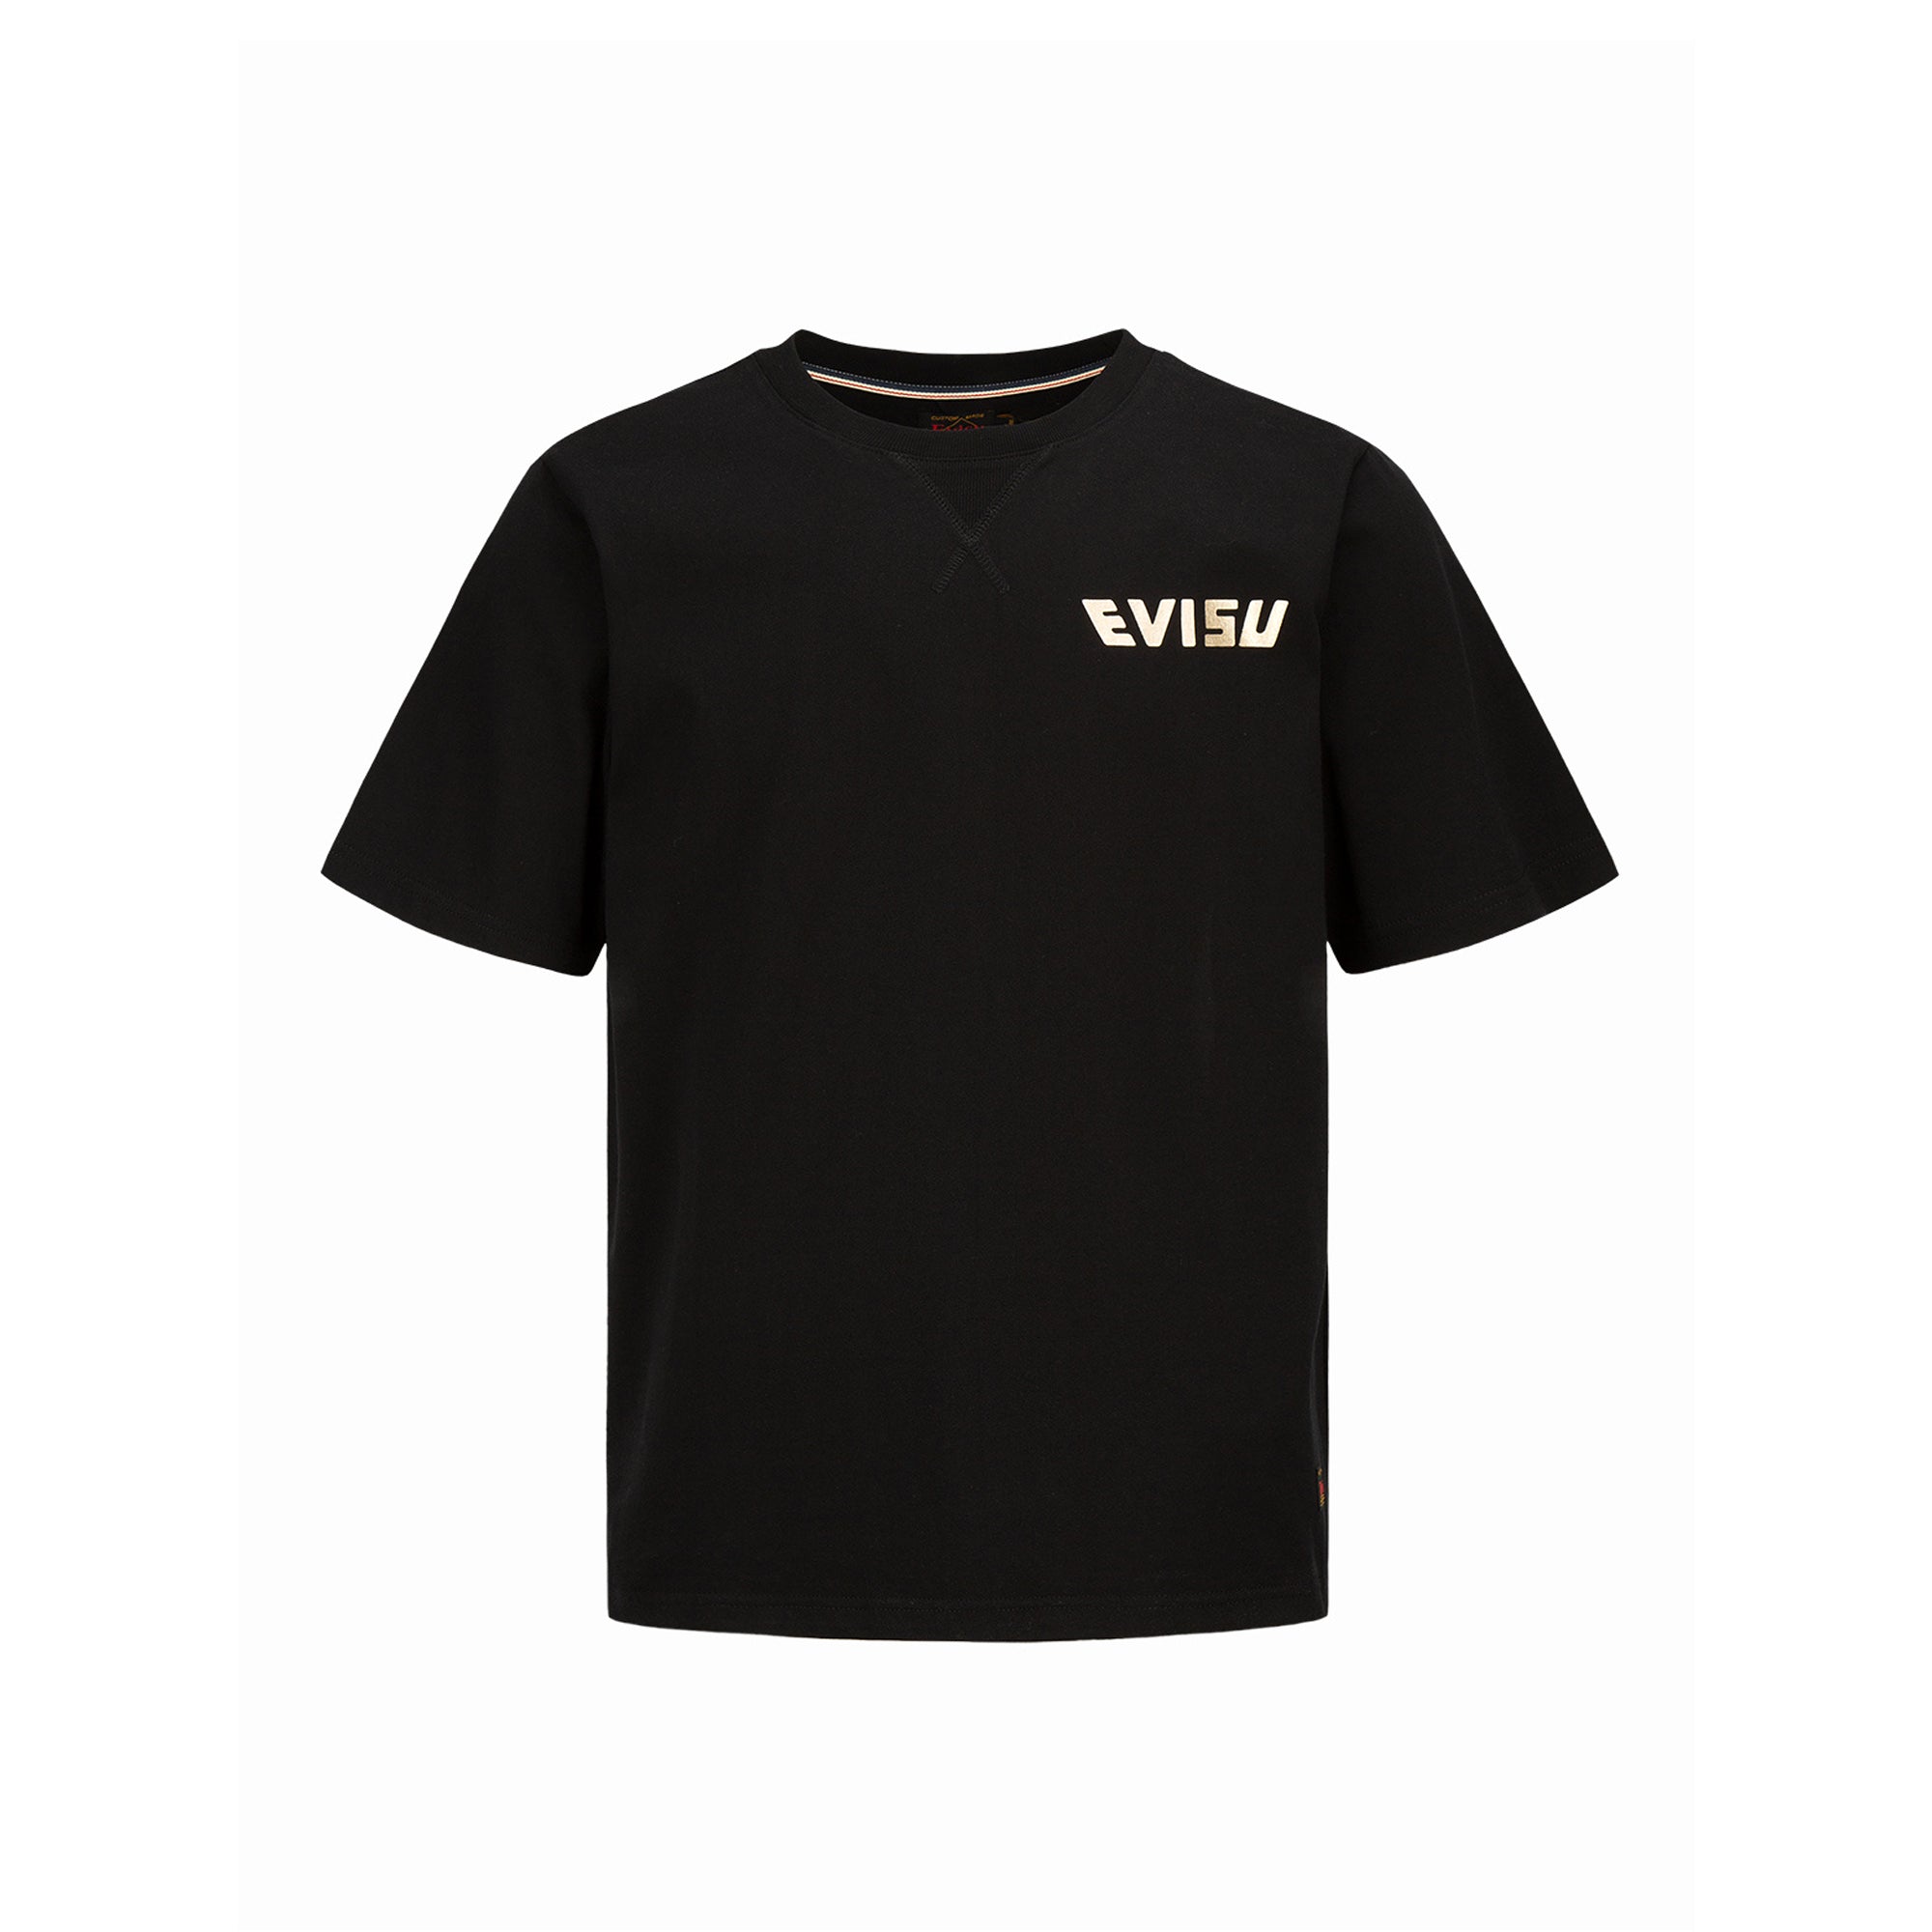 Evisu Calligraphy Printed Black T-Shirt